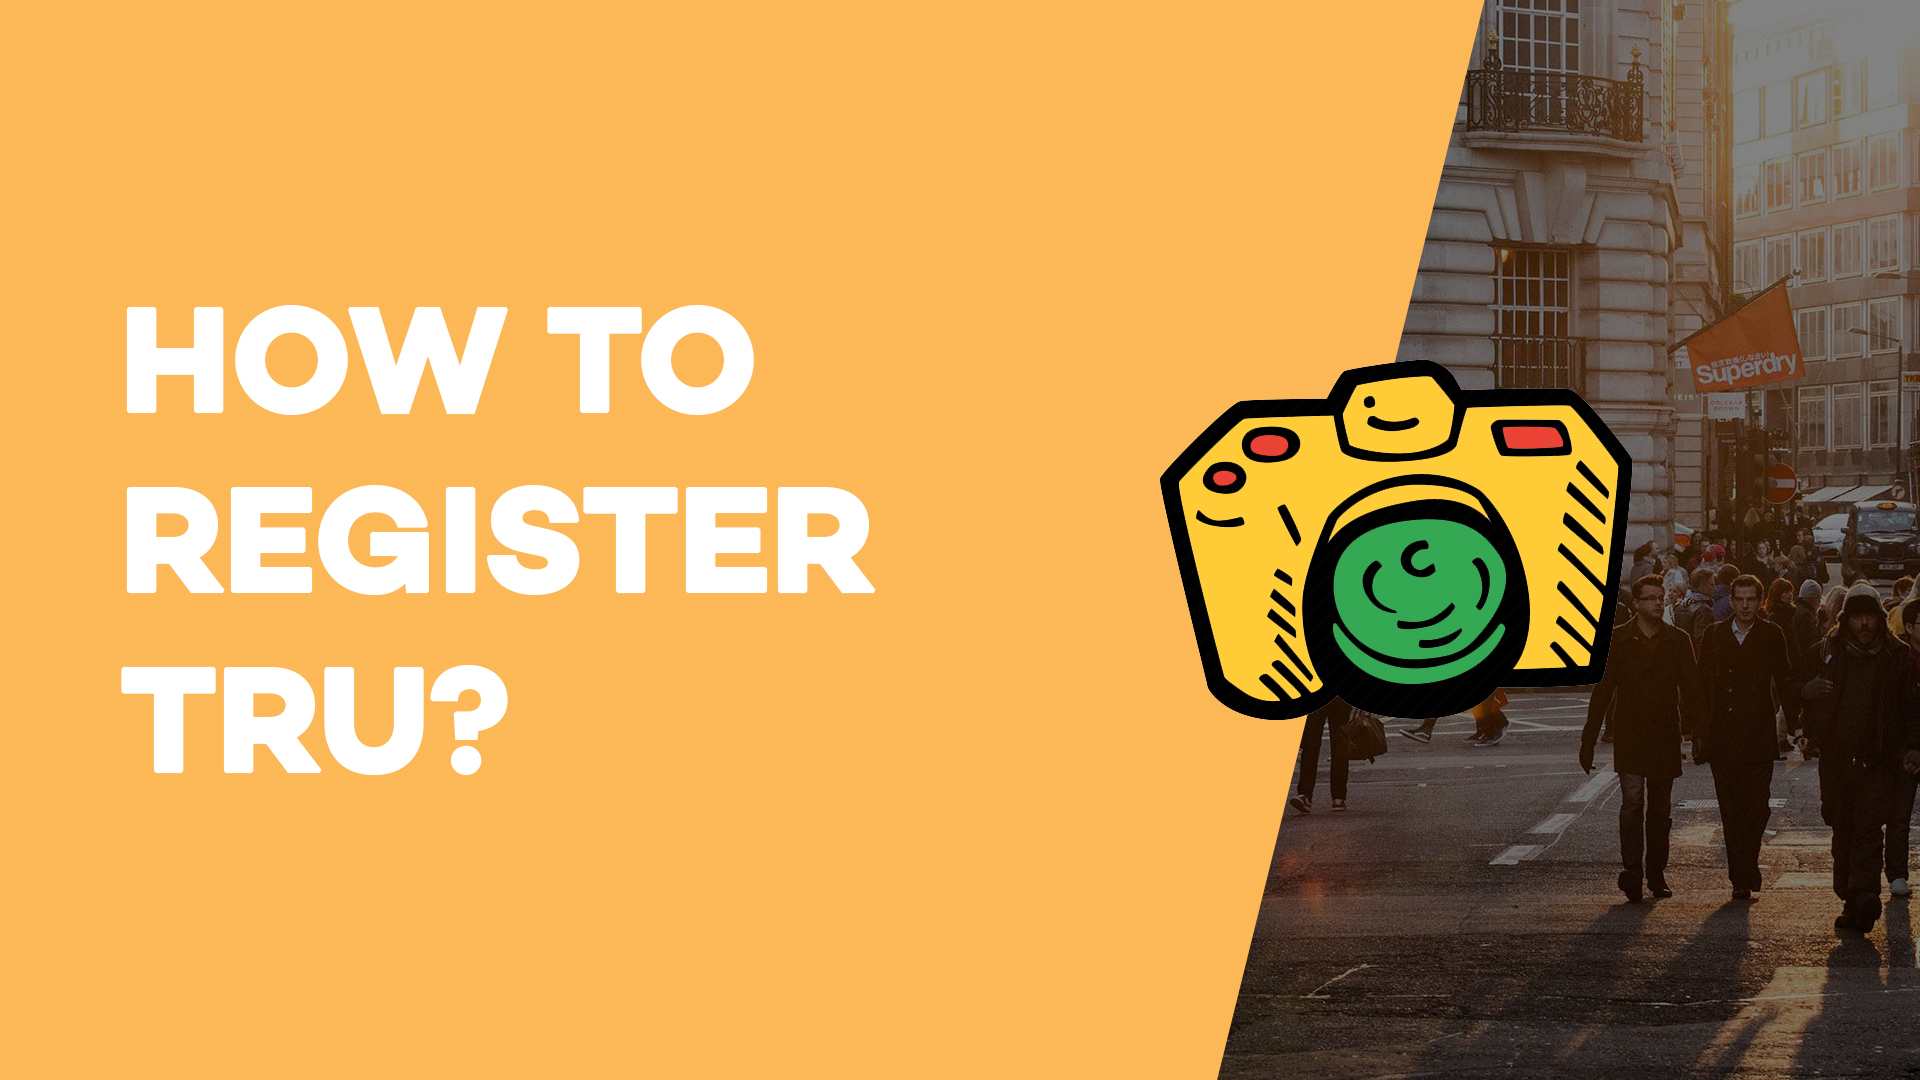 How to register Tru?